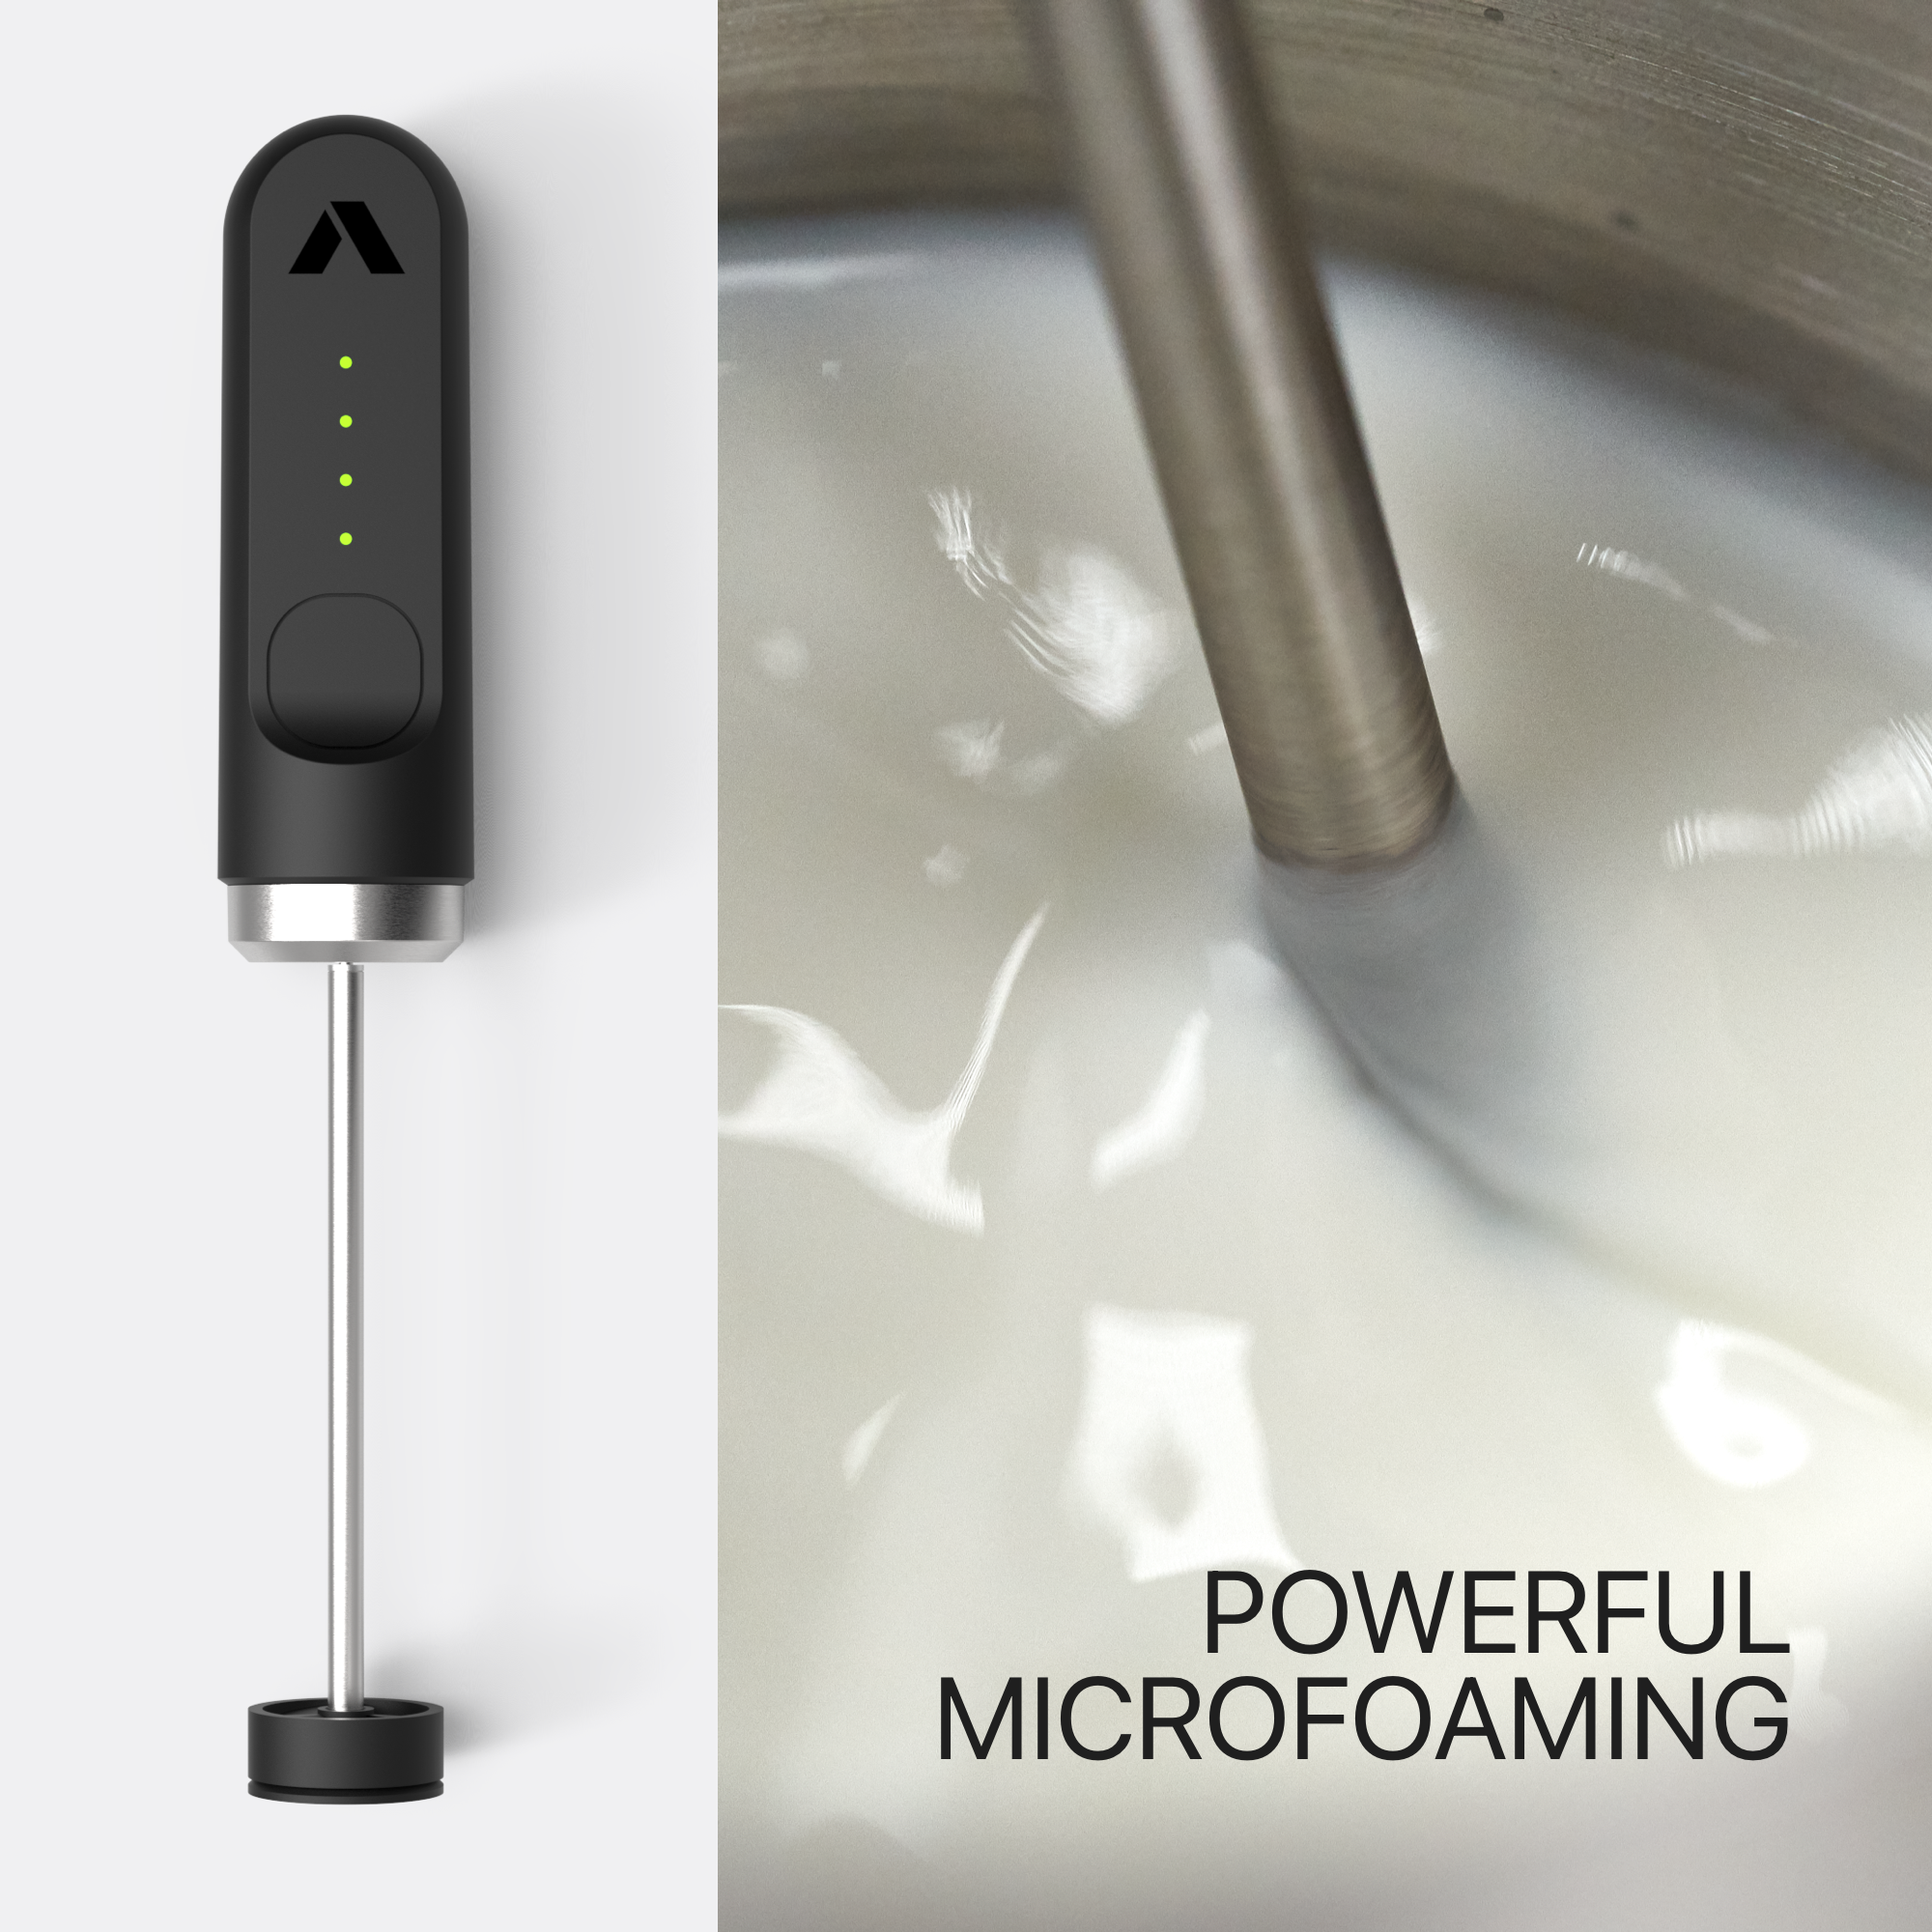  Subminimal NanoFoamer V2 Handheld Milk Foamers. Make